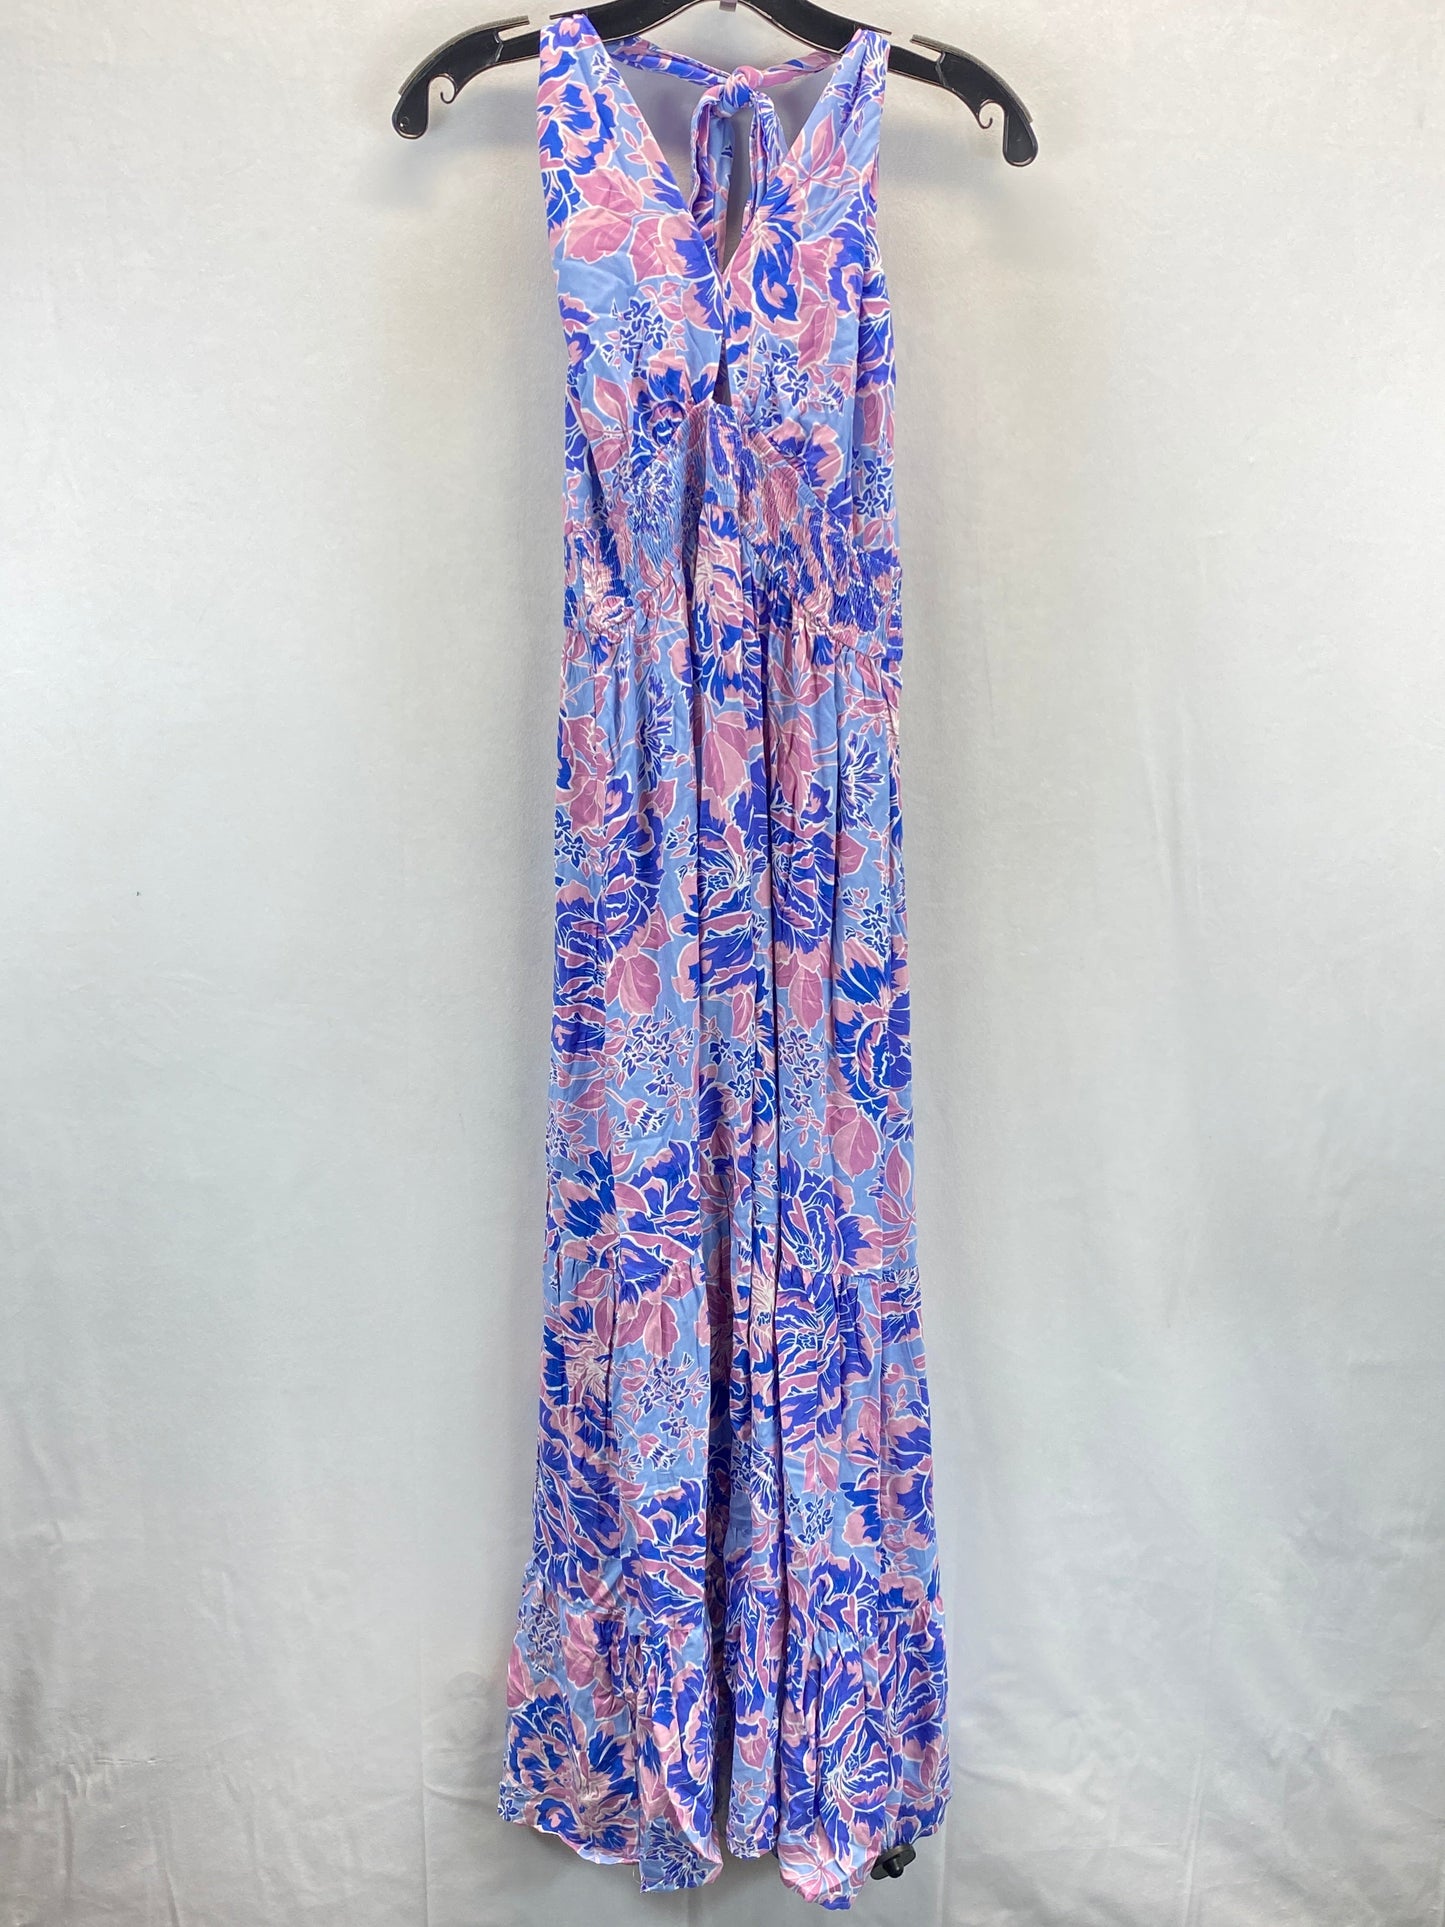 Floral Print Dress Casual Maxi Clothes Mentor, Size Xl